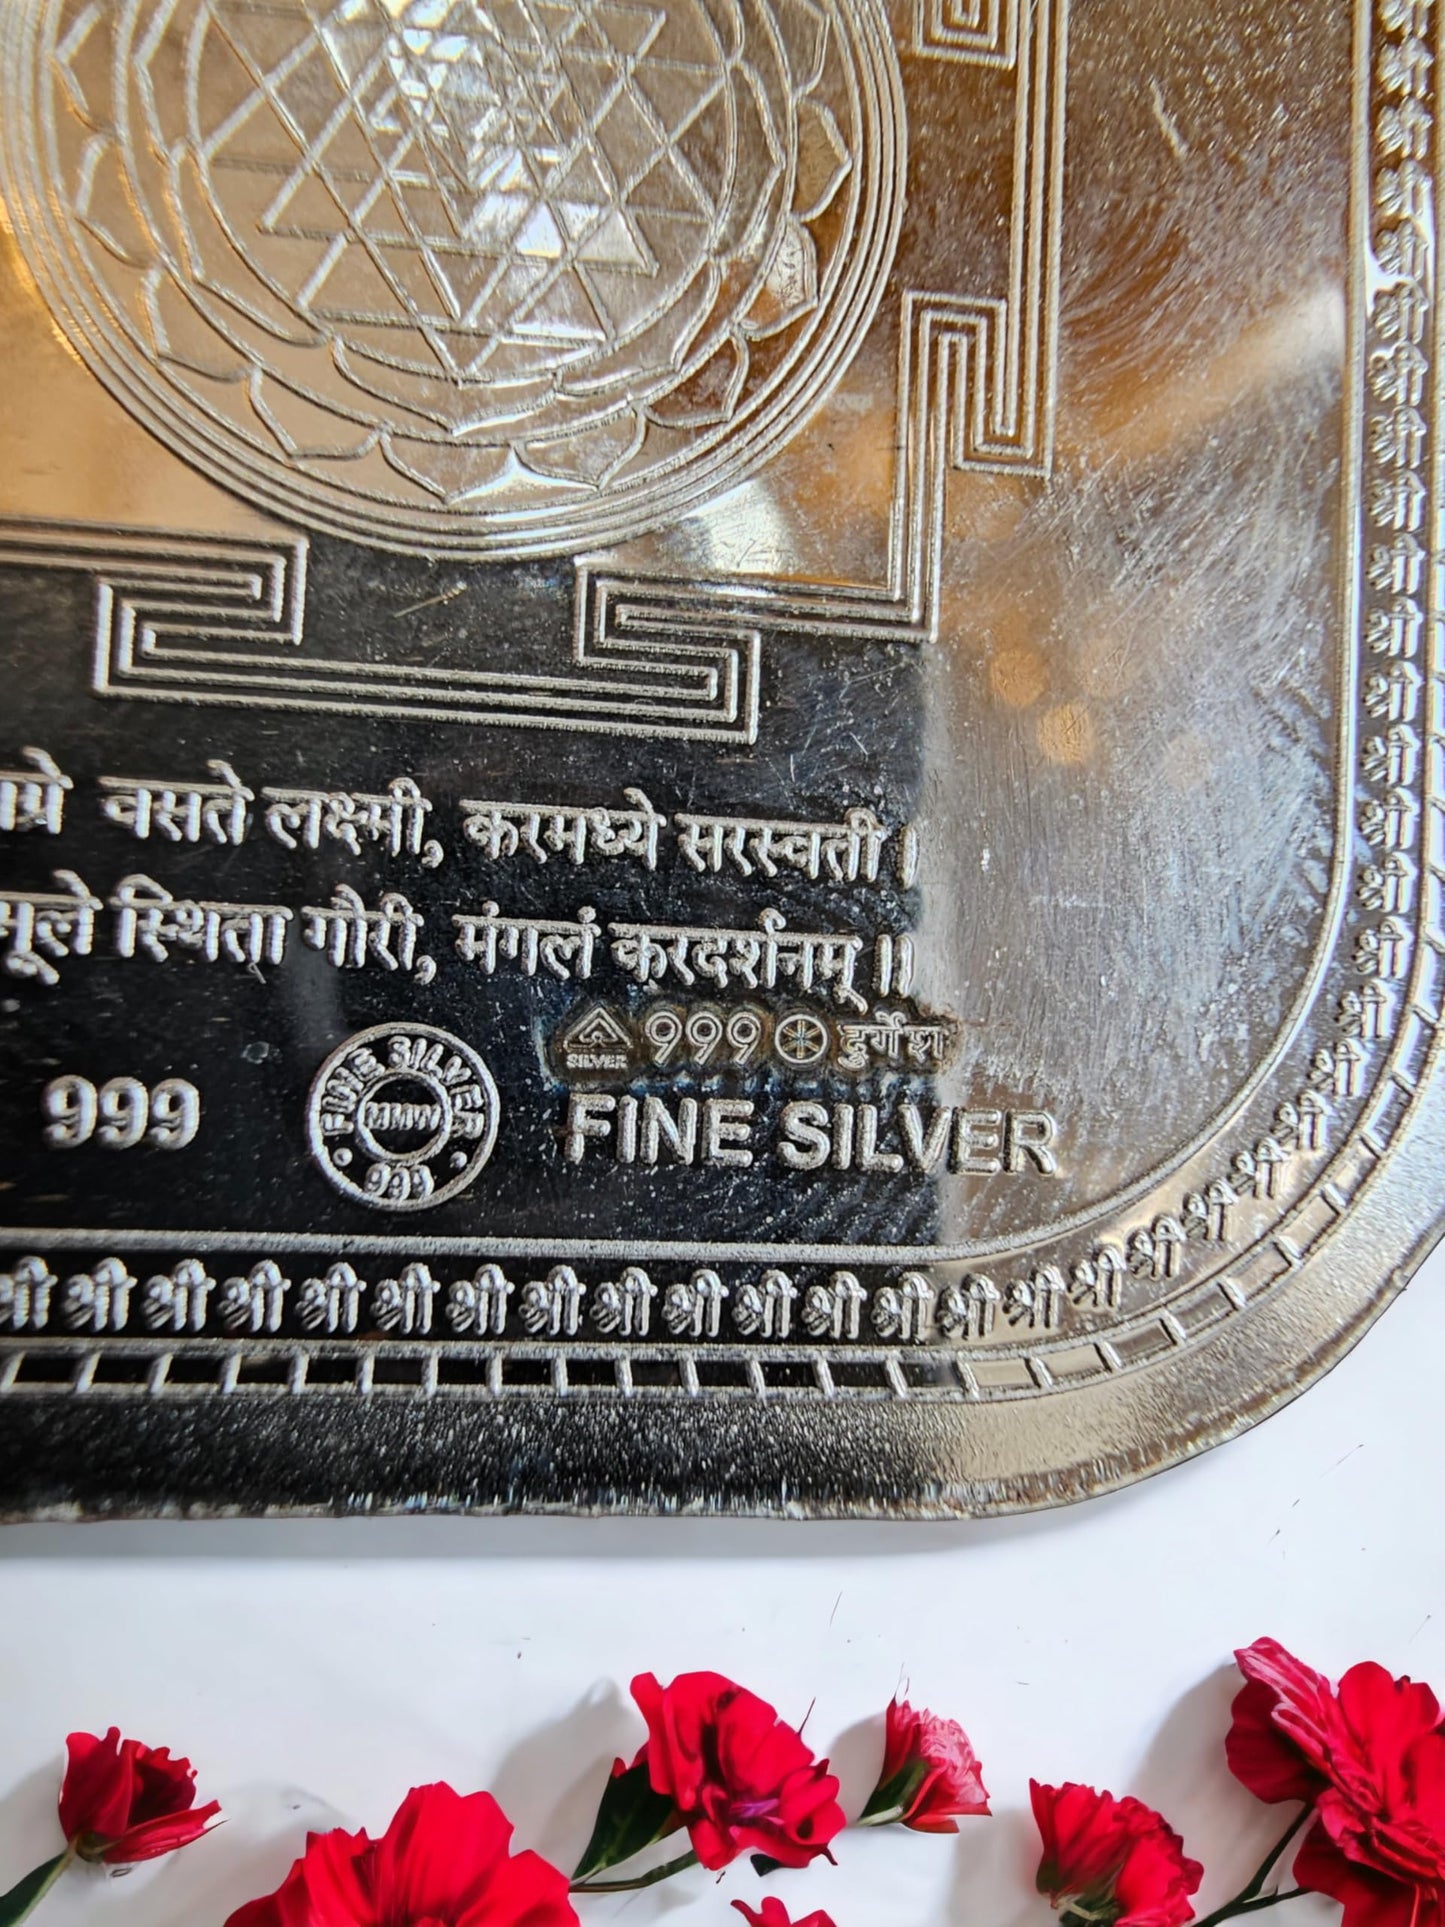 SJ SHUBHAM JEWELLERS 999 Purity Hallmark Silver Coin, Colorfull Laxmi Ganesh Saraswati Trimoorti Coin for Diwali - JewelYaari By Shubham Jewellers